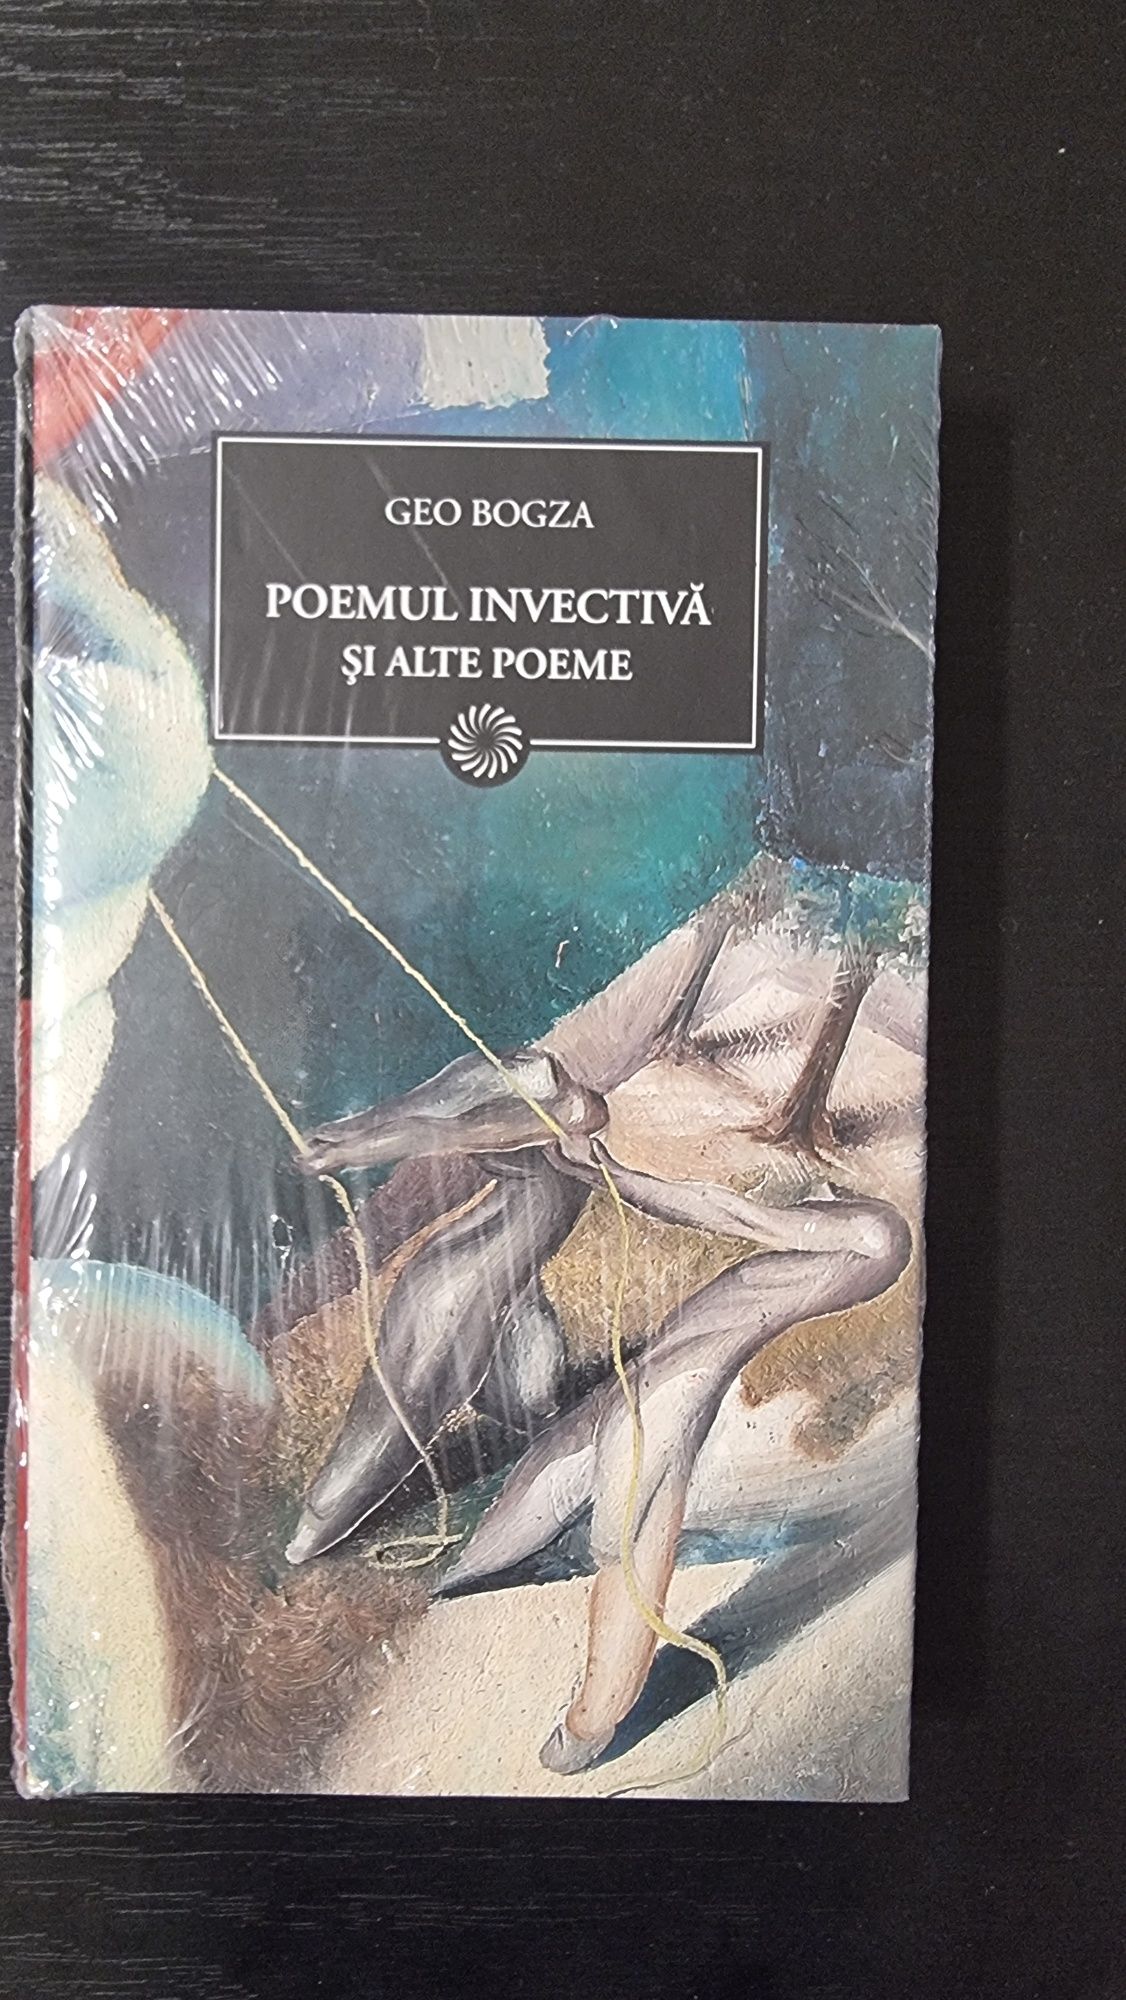 JN89 - Geo Bogza - Poemul Invectiva si alte poeme